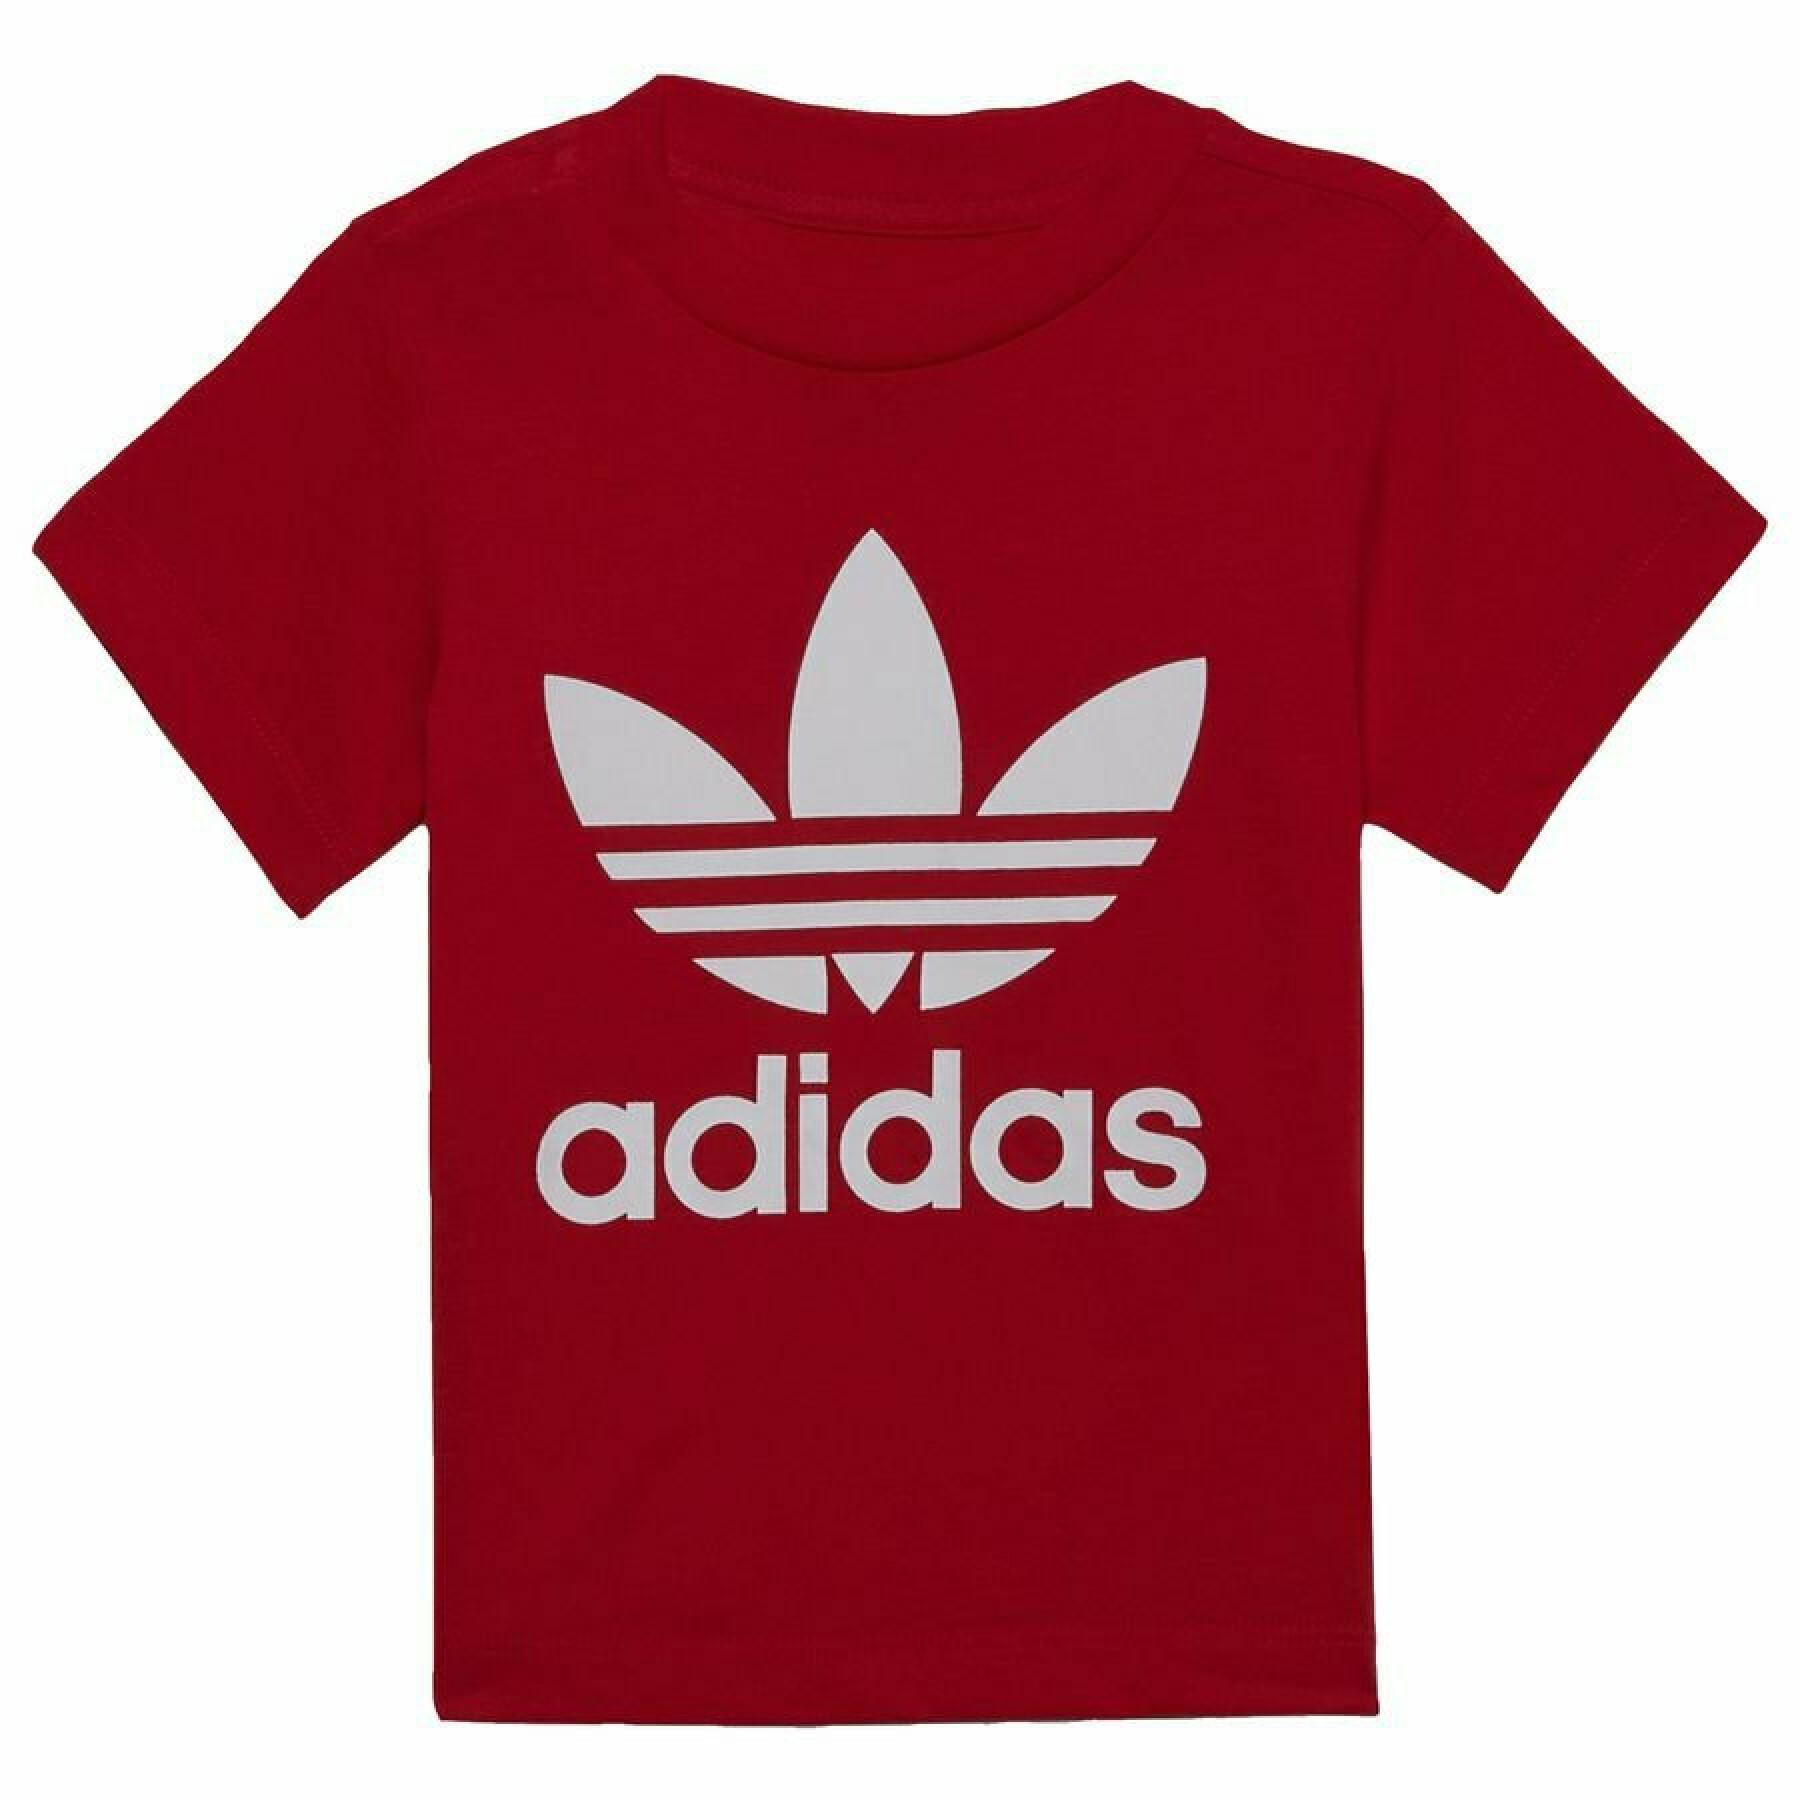 T-shirt enfant adidas Originals Trefoil